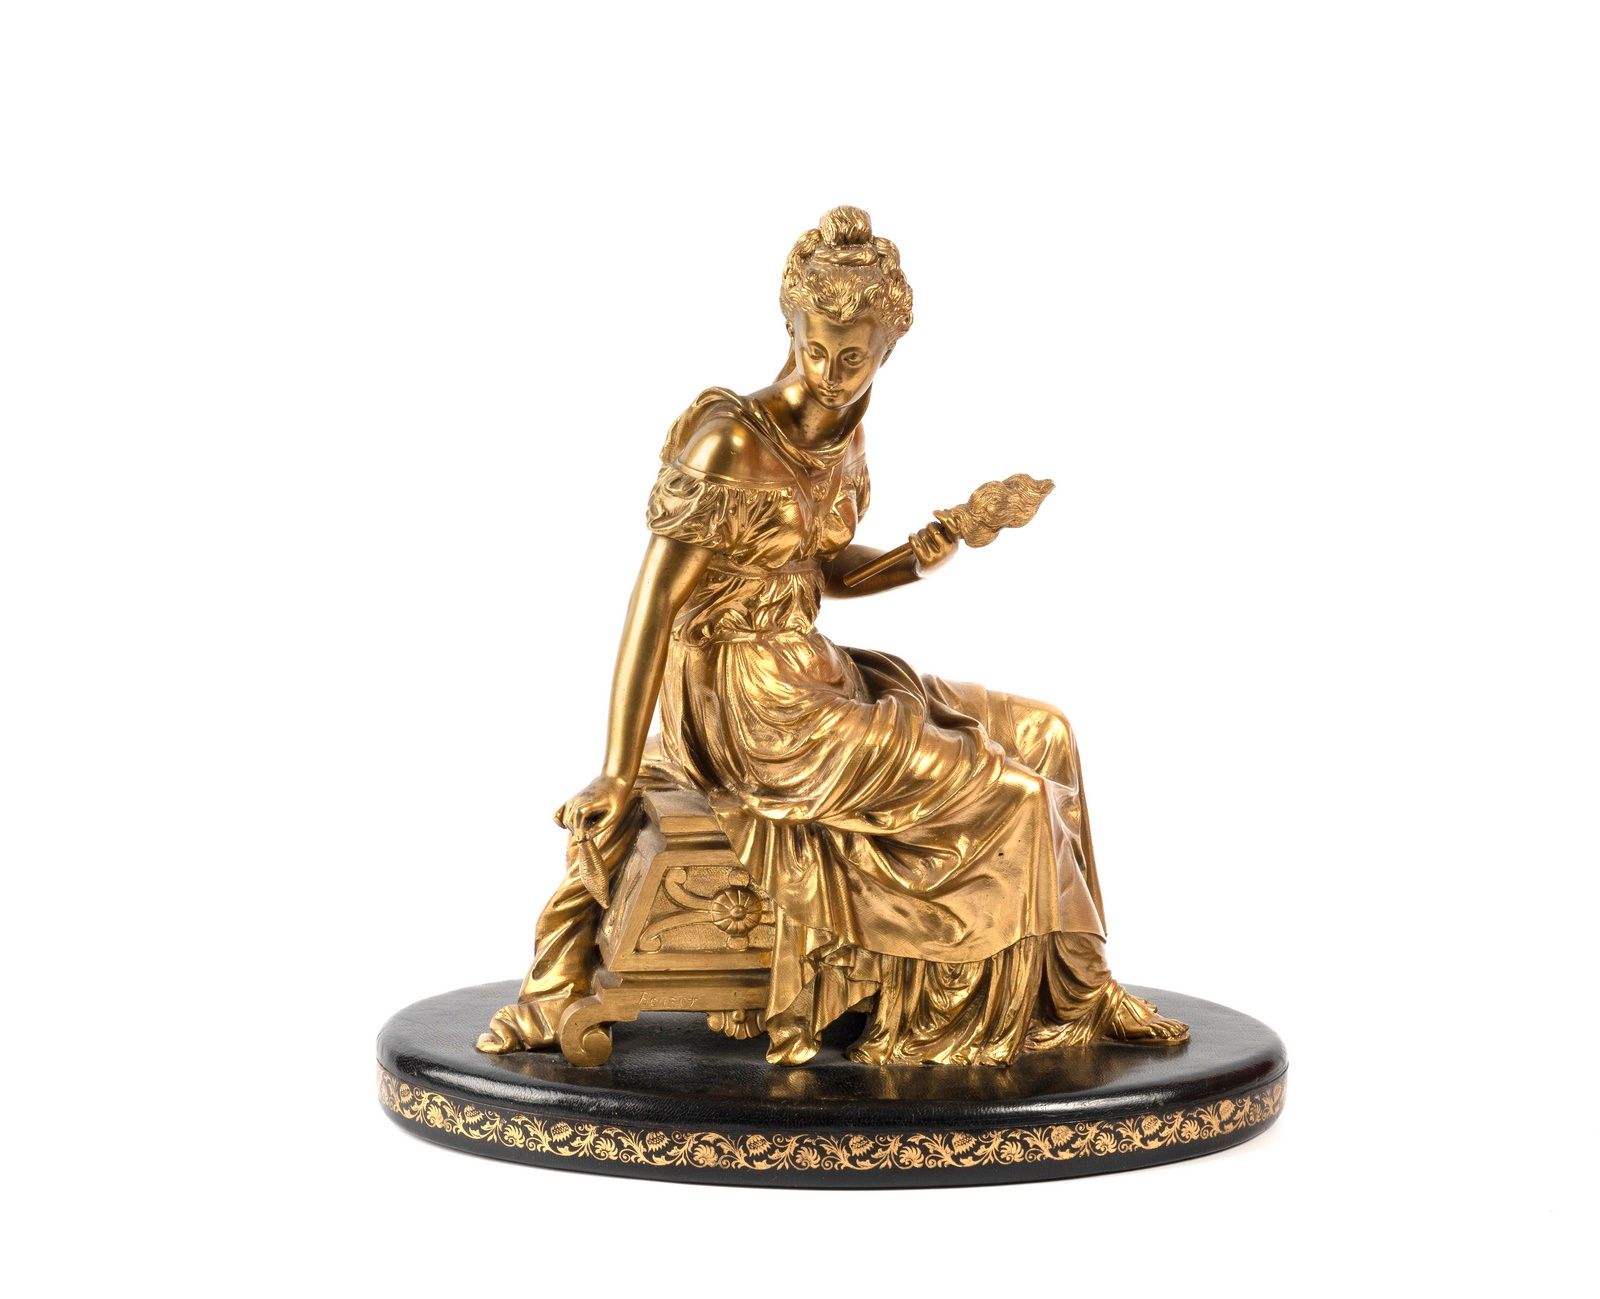 Null 欧特罗普-布雷 (1833-1906)
旋转器
鎏金青铜证明
署名 "Bouret"。
高：24厘米。
木质底座上覆盖着黑色的摩尔可，并带有叶片装饰的&hellip;